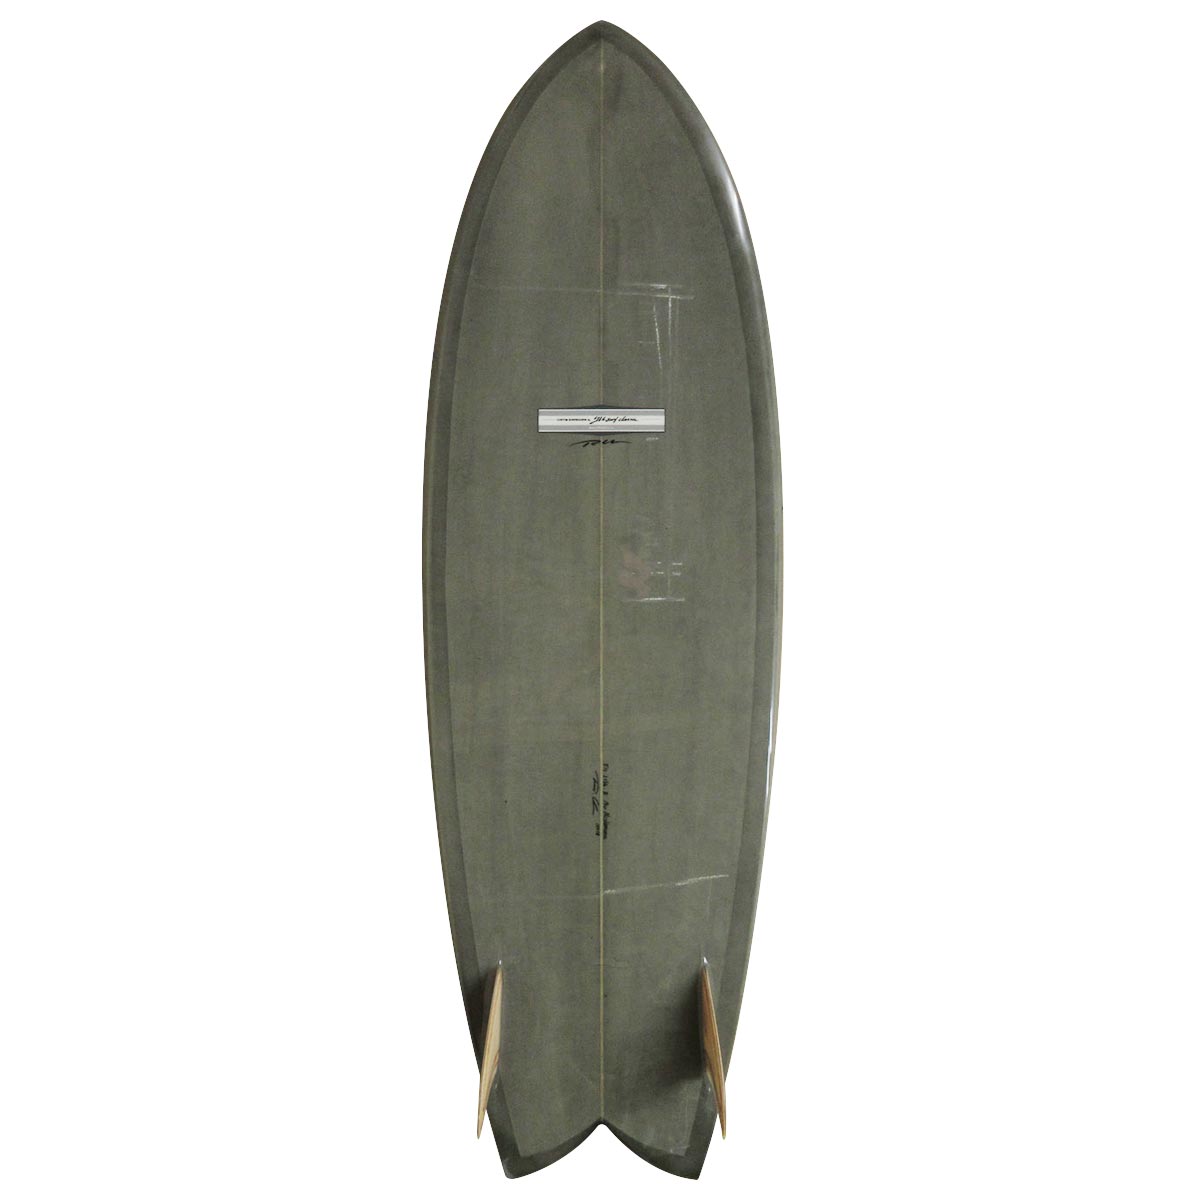 YU SURF CLASSIC / TWIN FISH 5`11 Shaped by RU